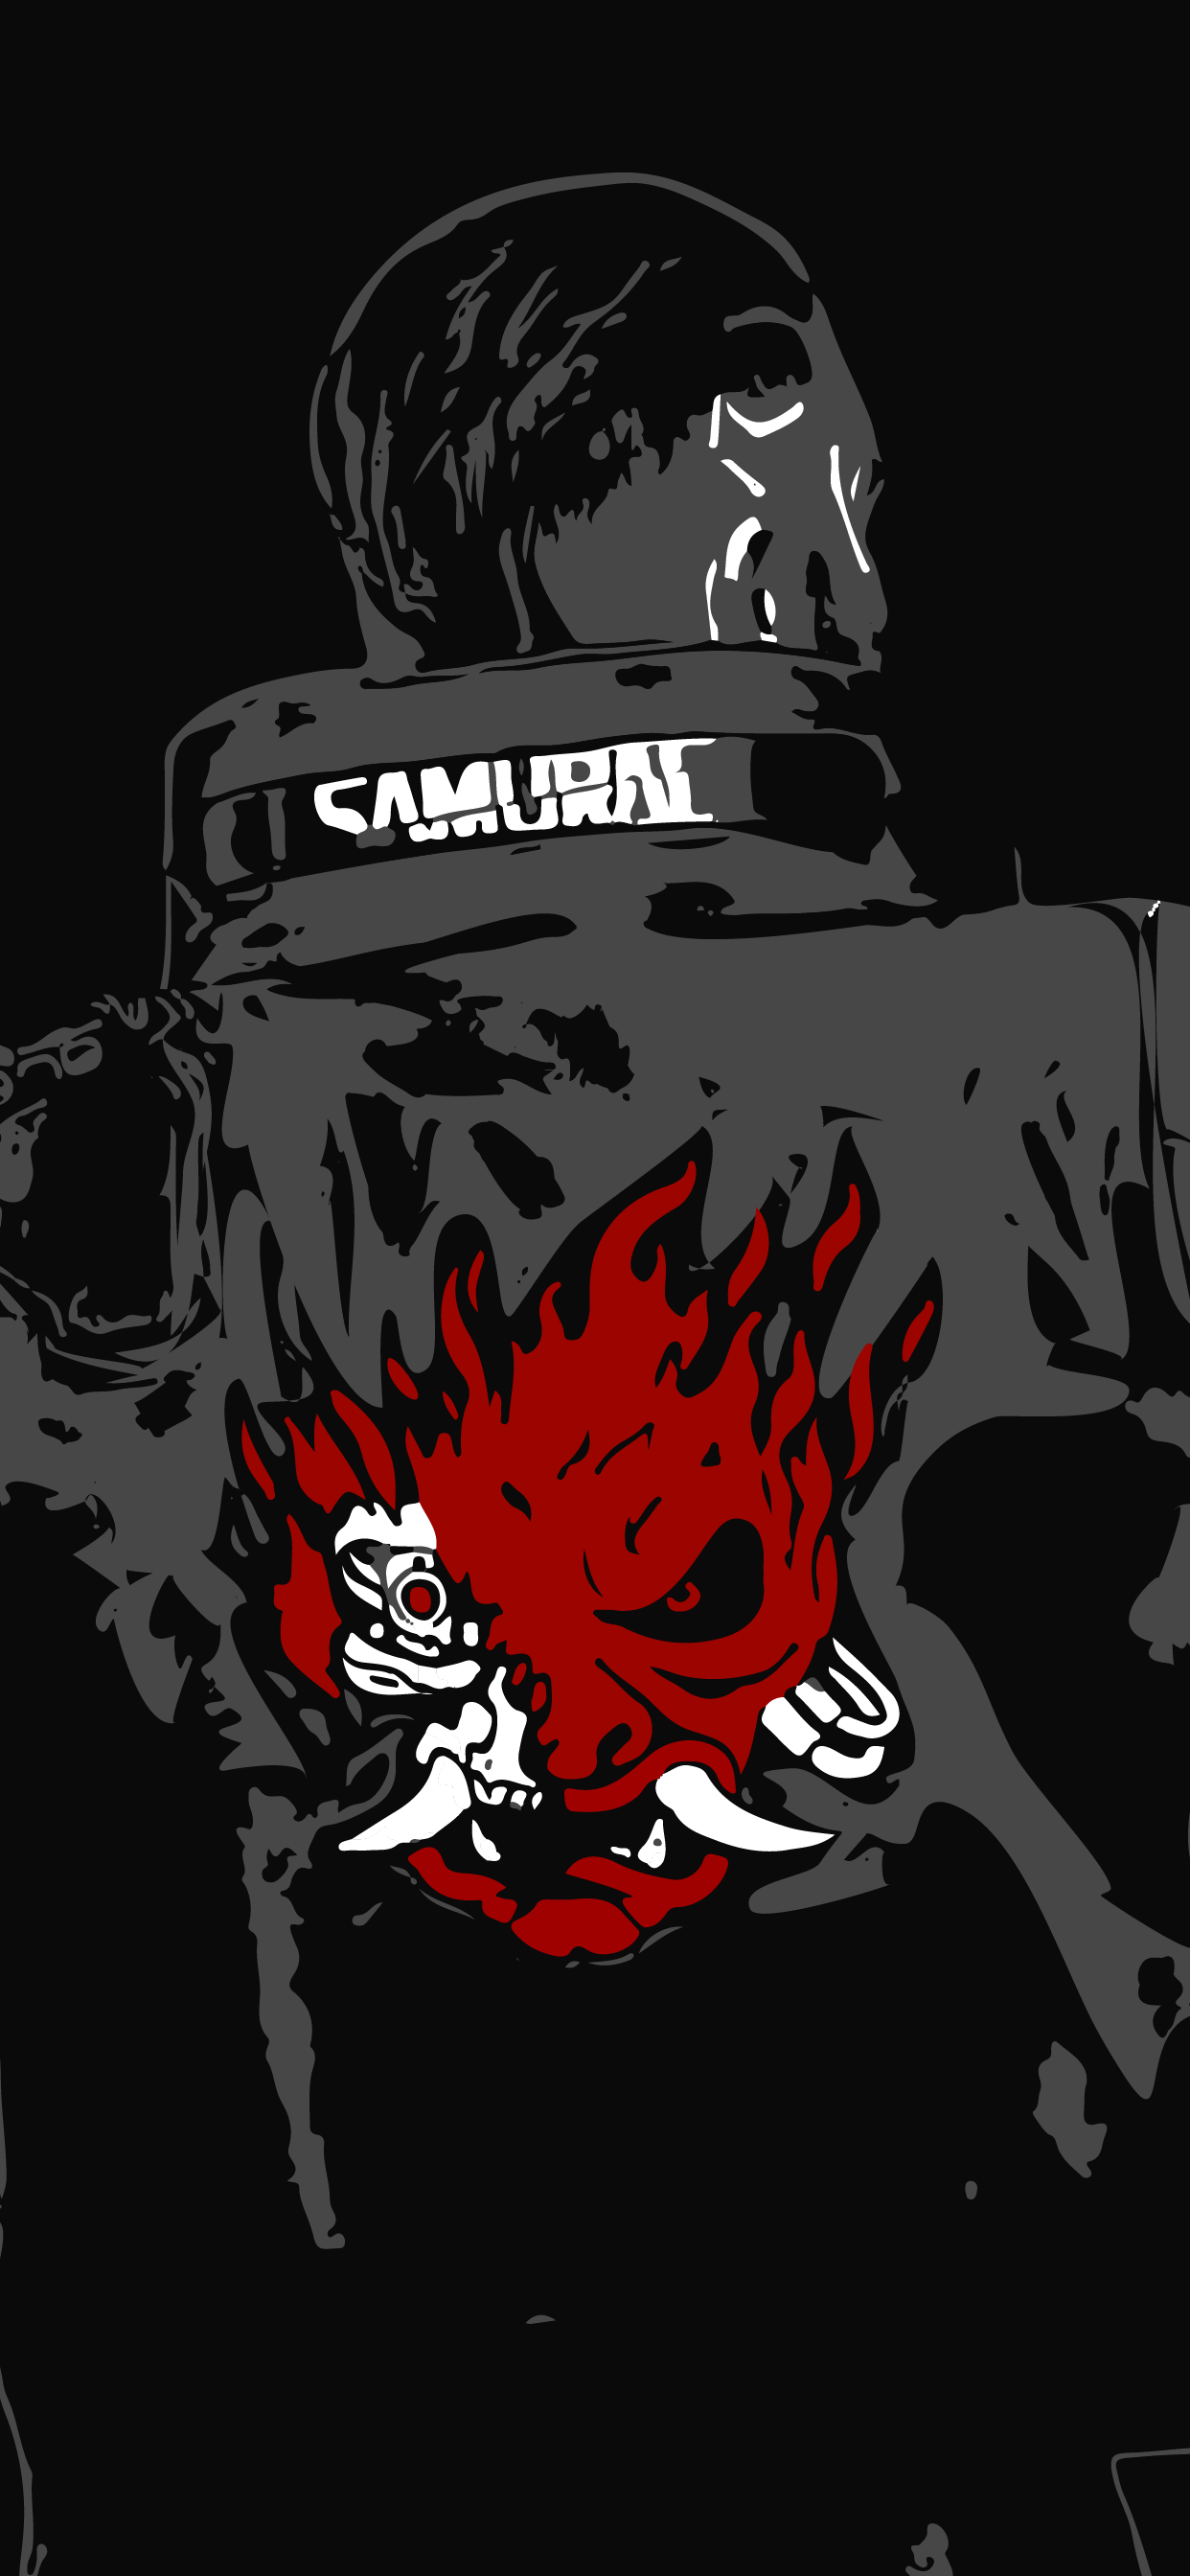 wallpaper for phone of character v of cyberpunk 2077 game jacket samurai logo